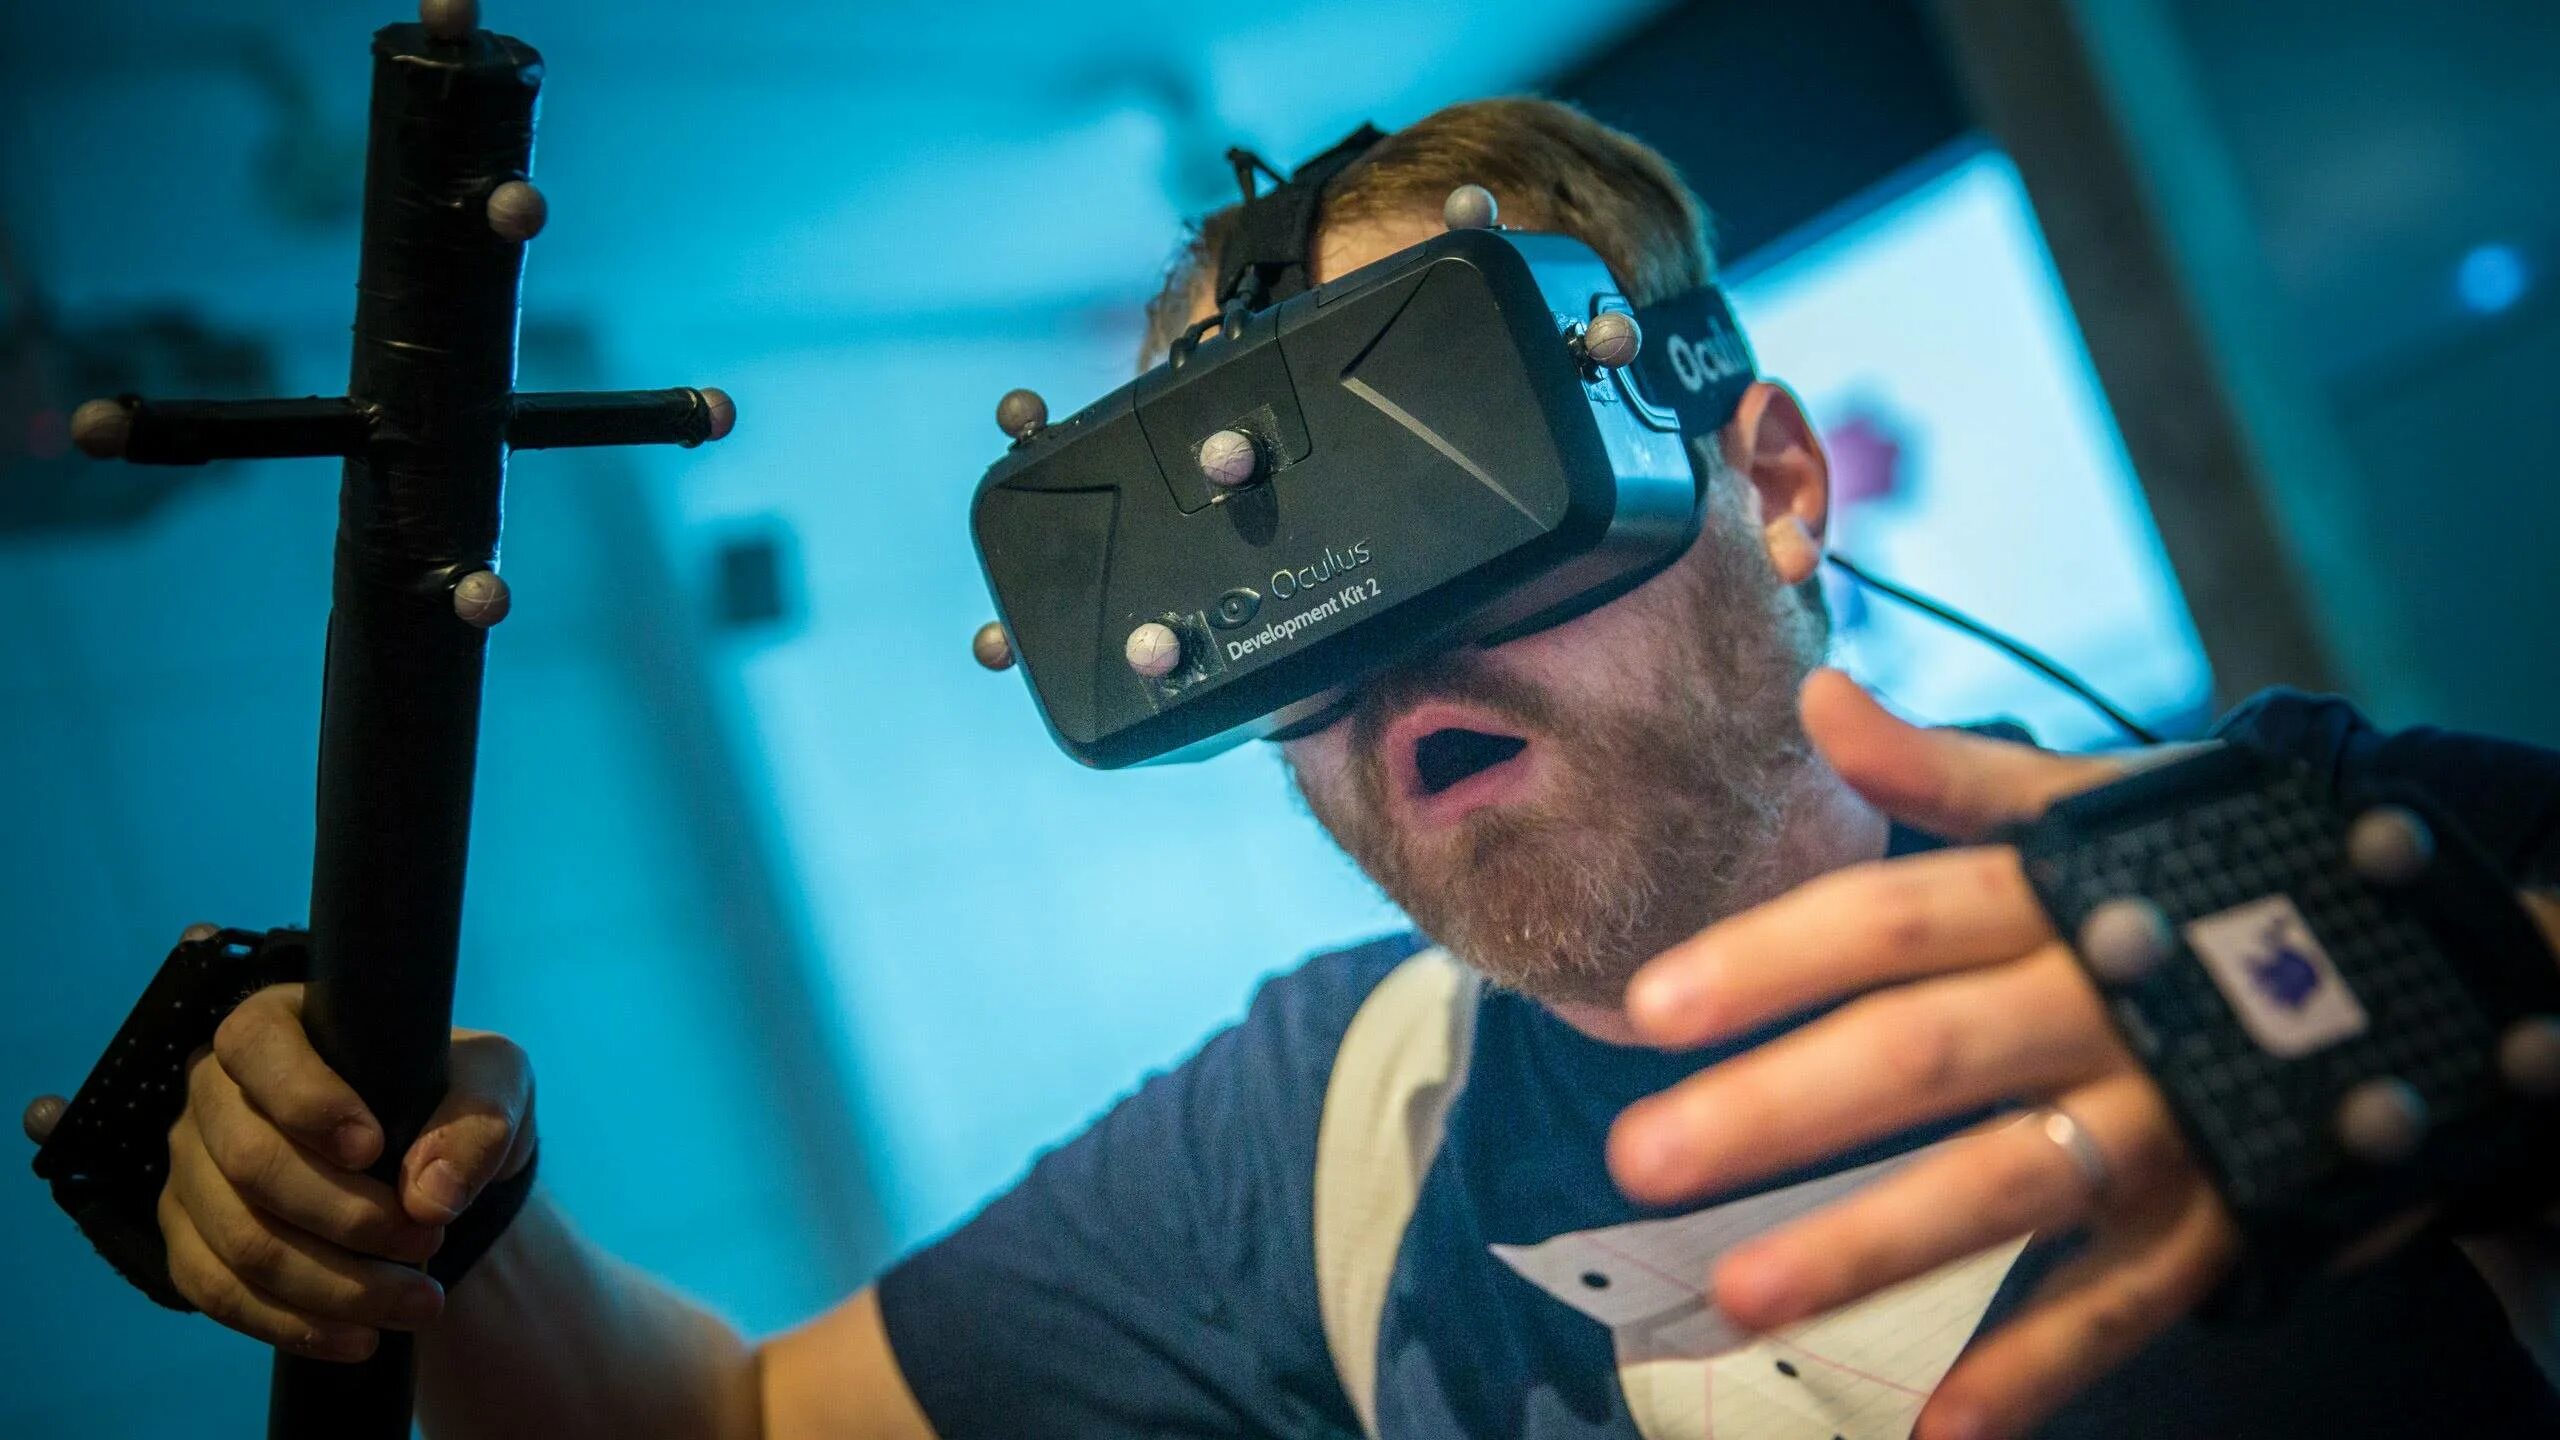 Виртуальная реальность (Virtual reality, VR). Куплинов VR. Oculus Quest виртуальная реальность. «Виртуальная реальность в Unity» (2016)..